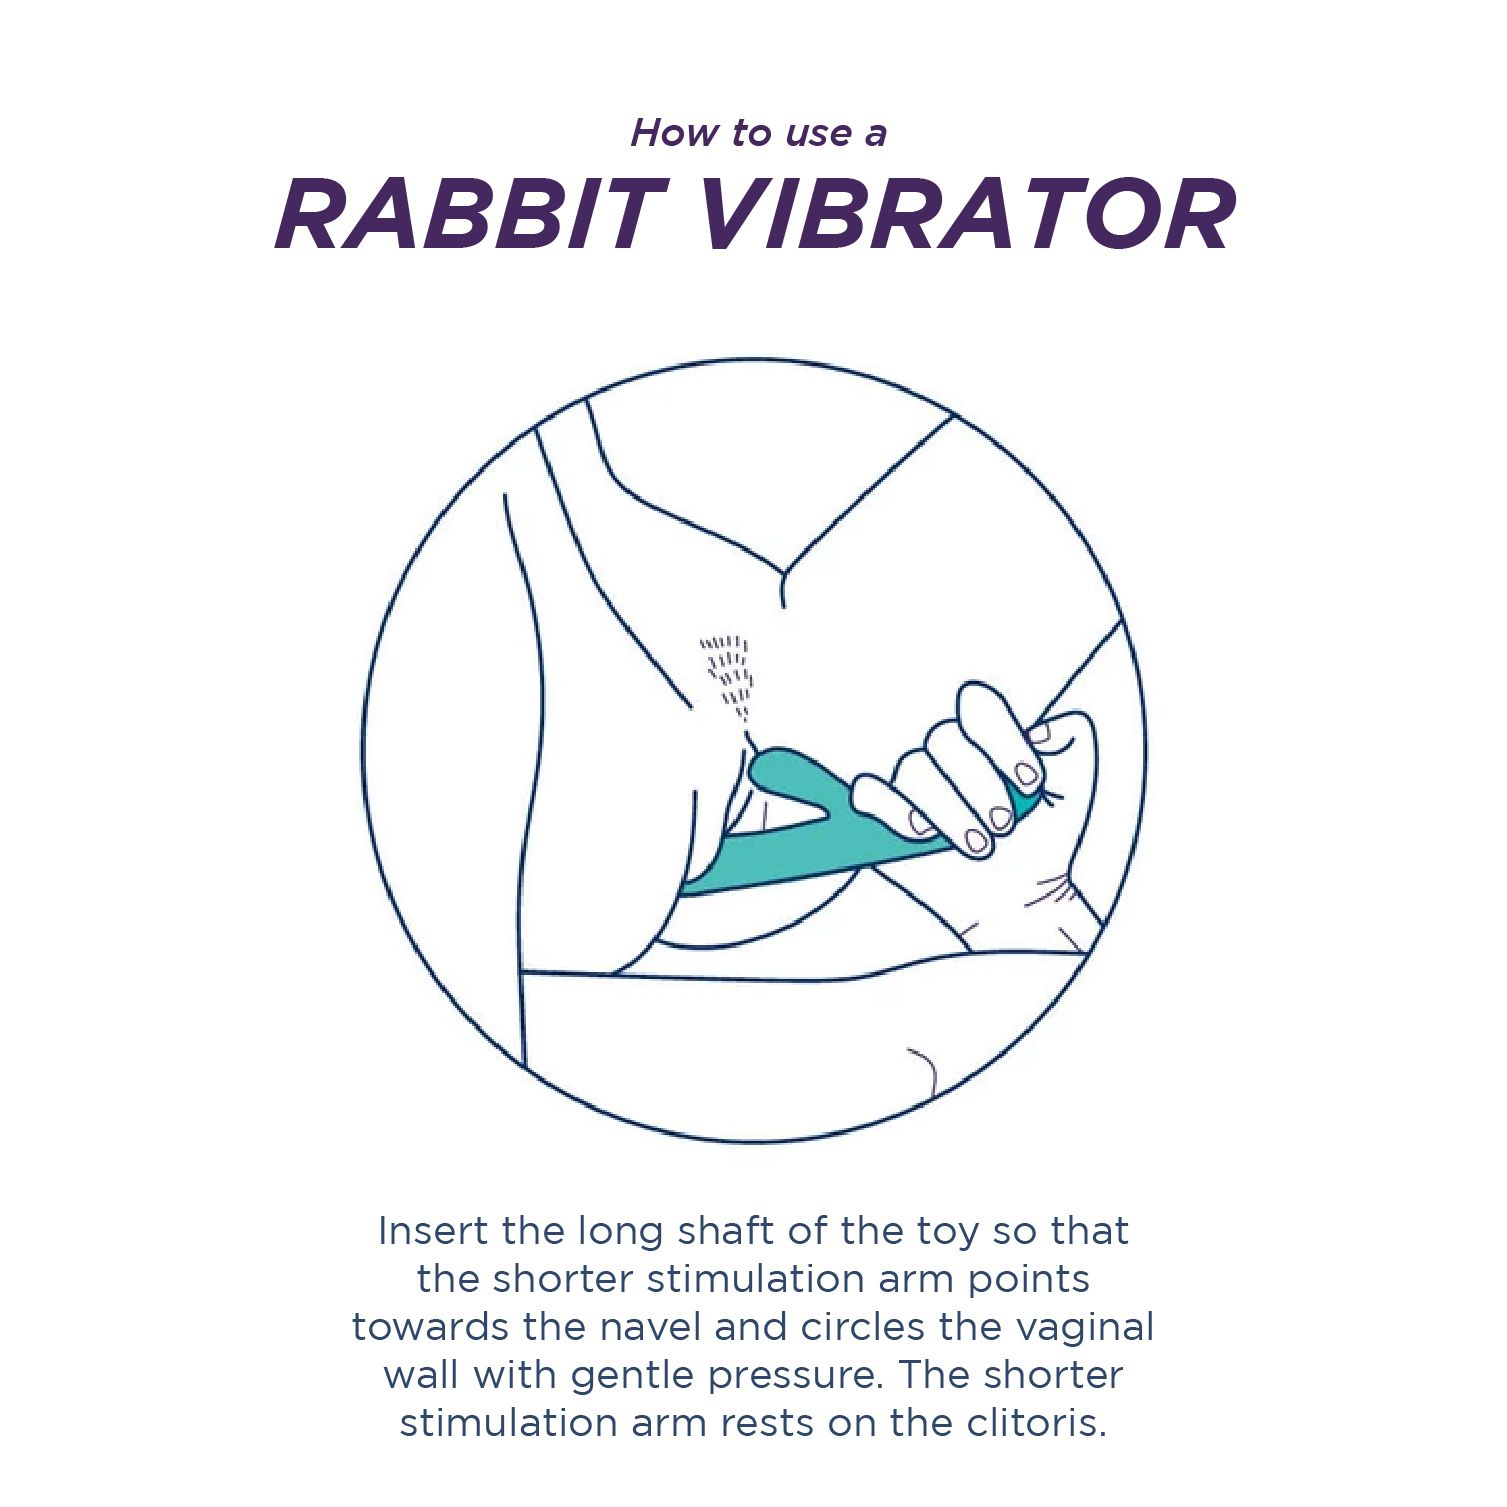 LELO LELO - Ina Rabbit-Vibrator g-spot-vibrators 3 Meerschaum 